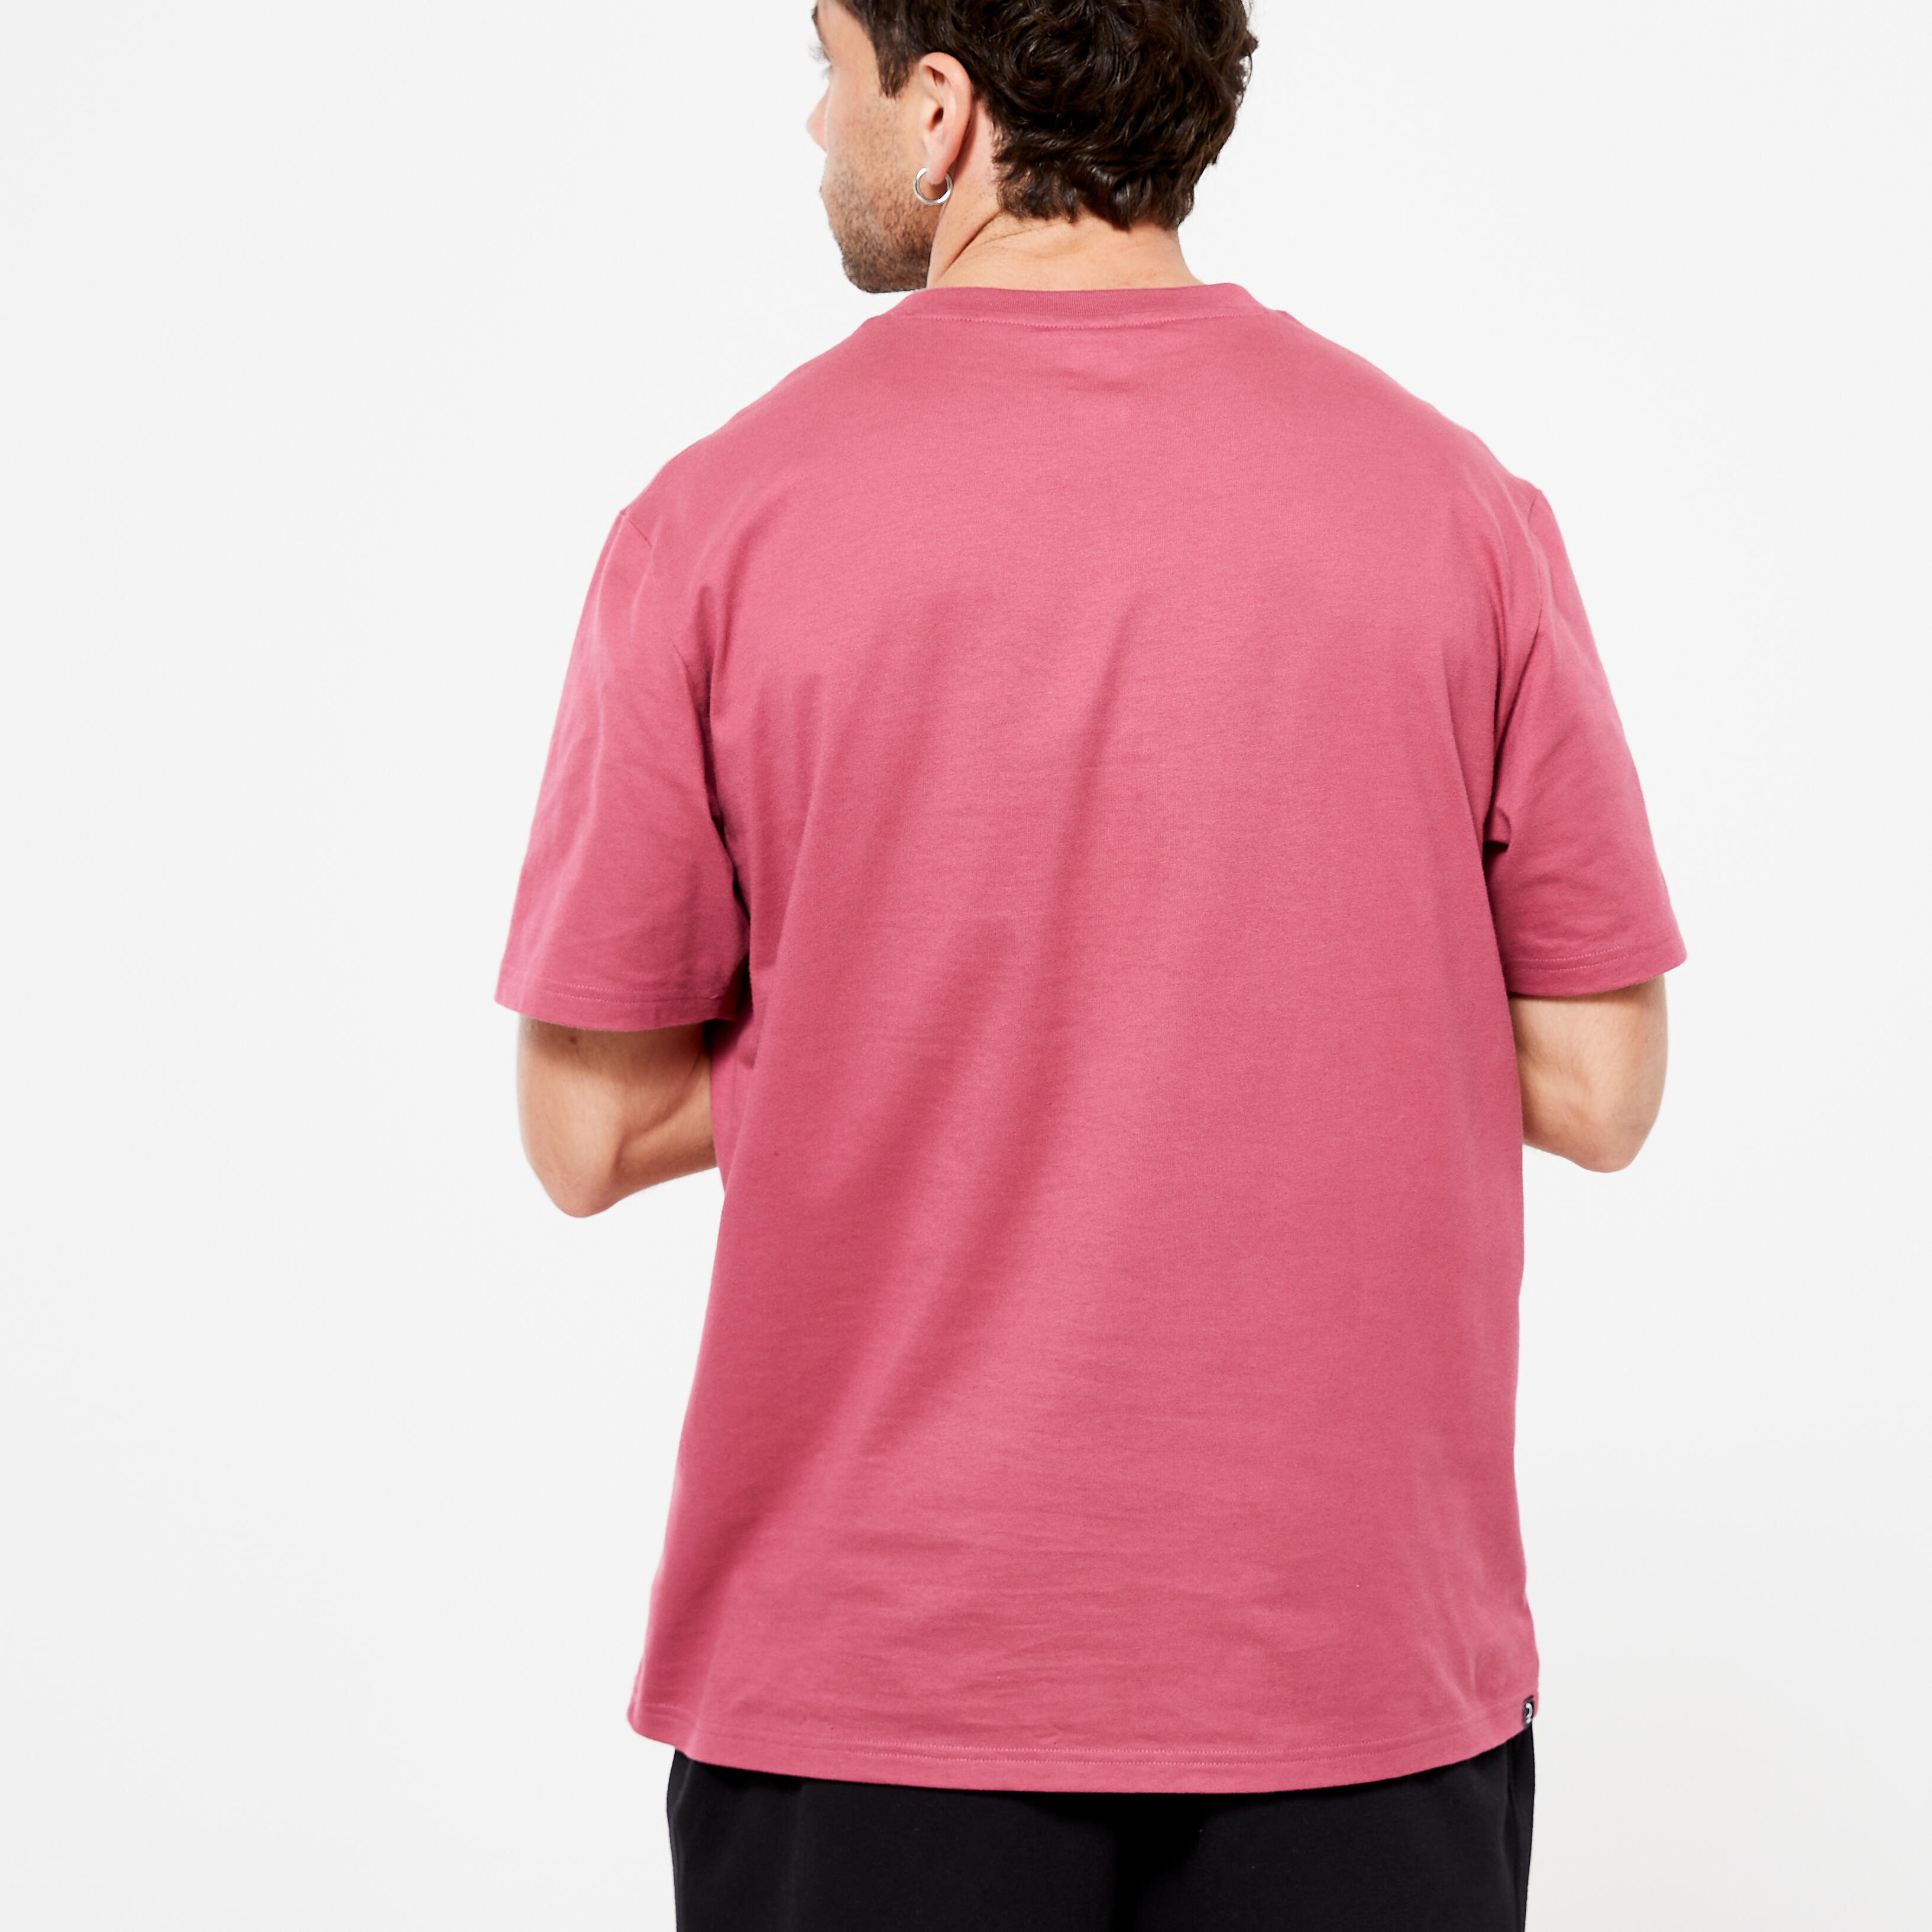 Men's Fitness T-Shirt - Essentials 500 - Ash hibiscus pink